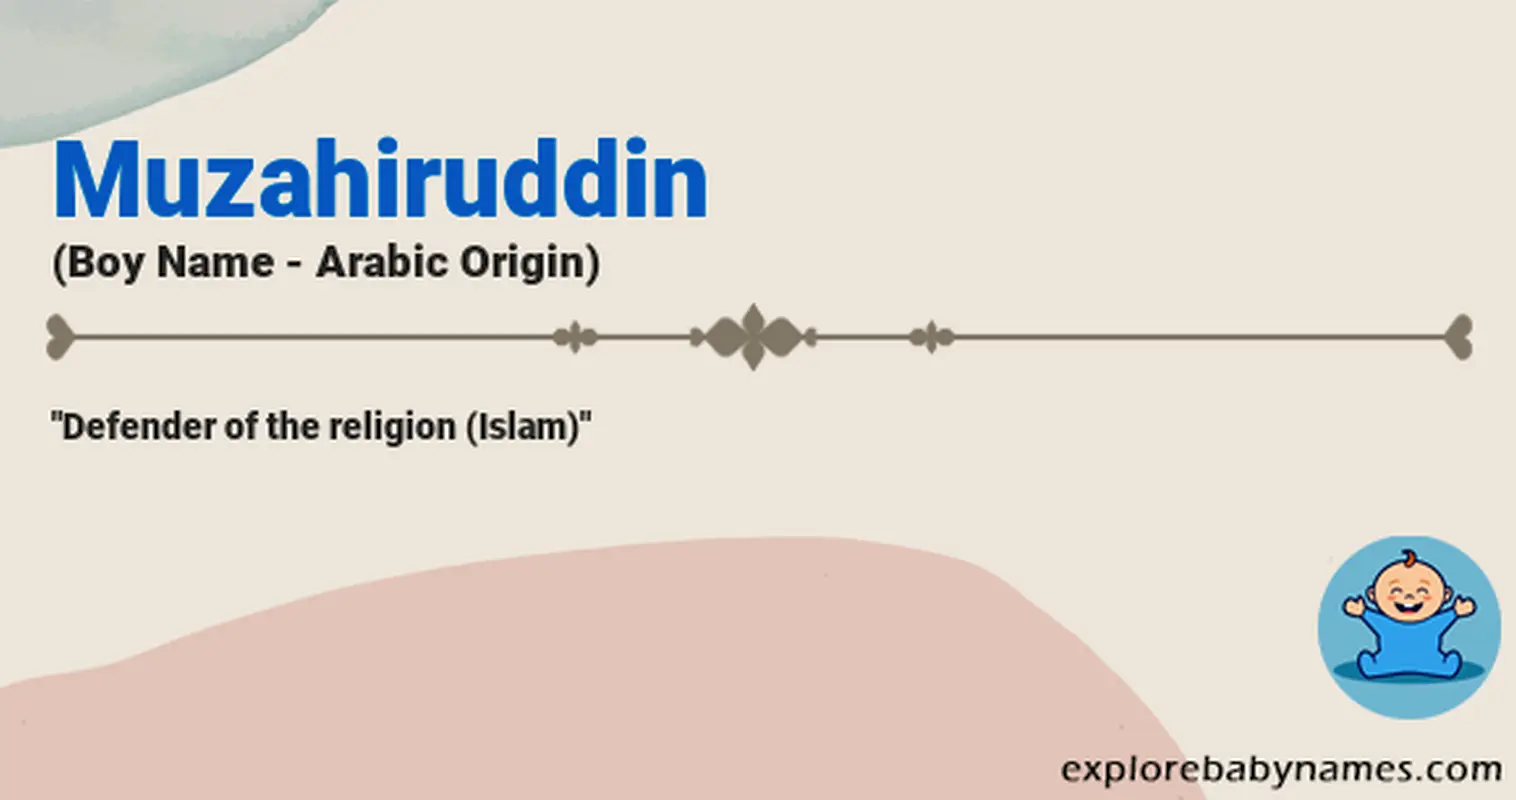 Meaning of Muzahiruddin